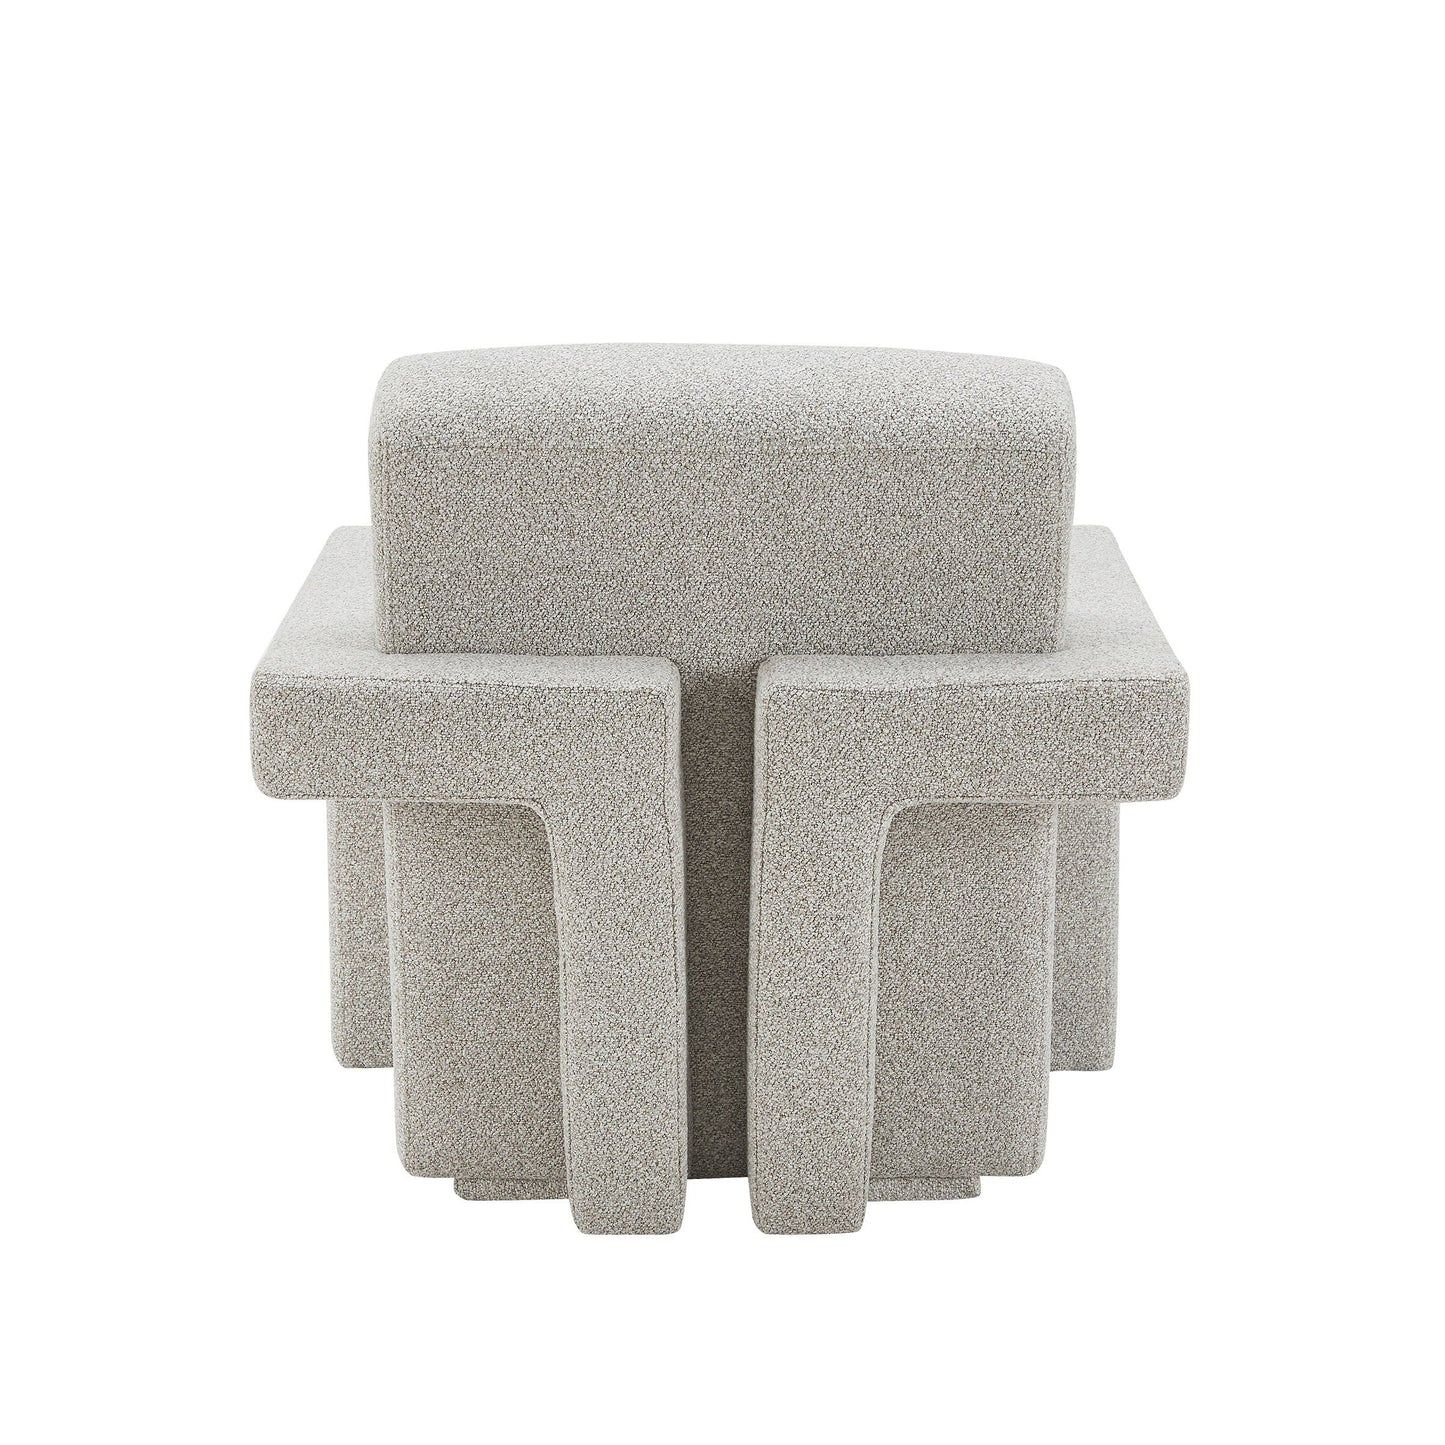 Modrest Wylie - Modern Light Grey-Beige Fabric Accent Chair